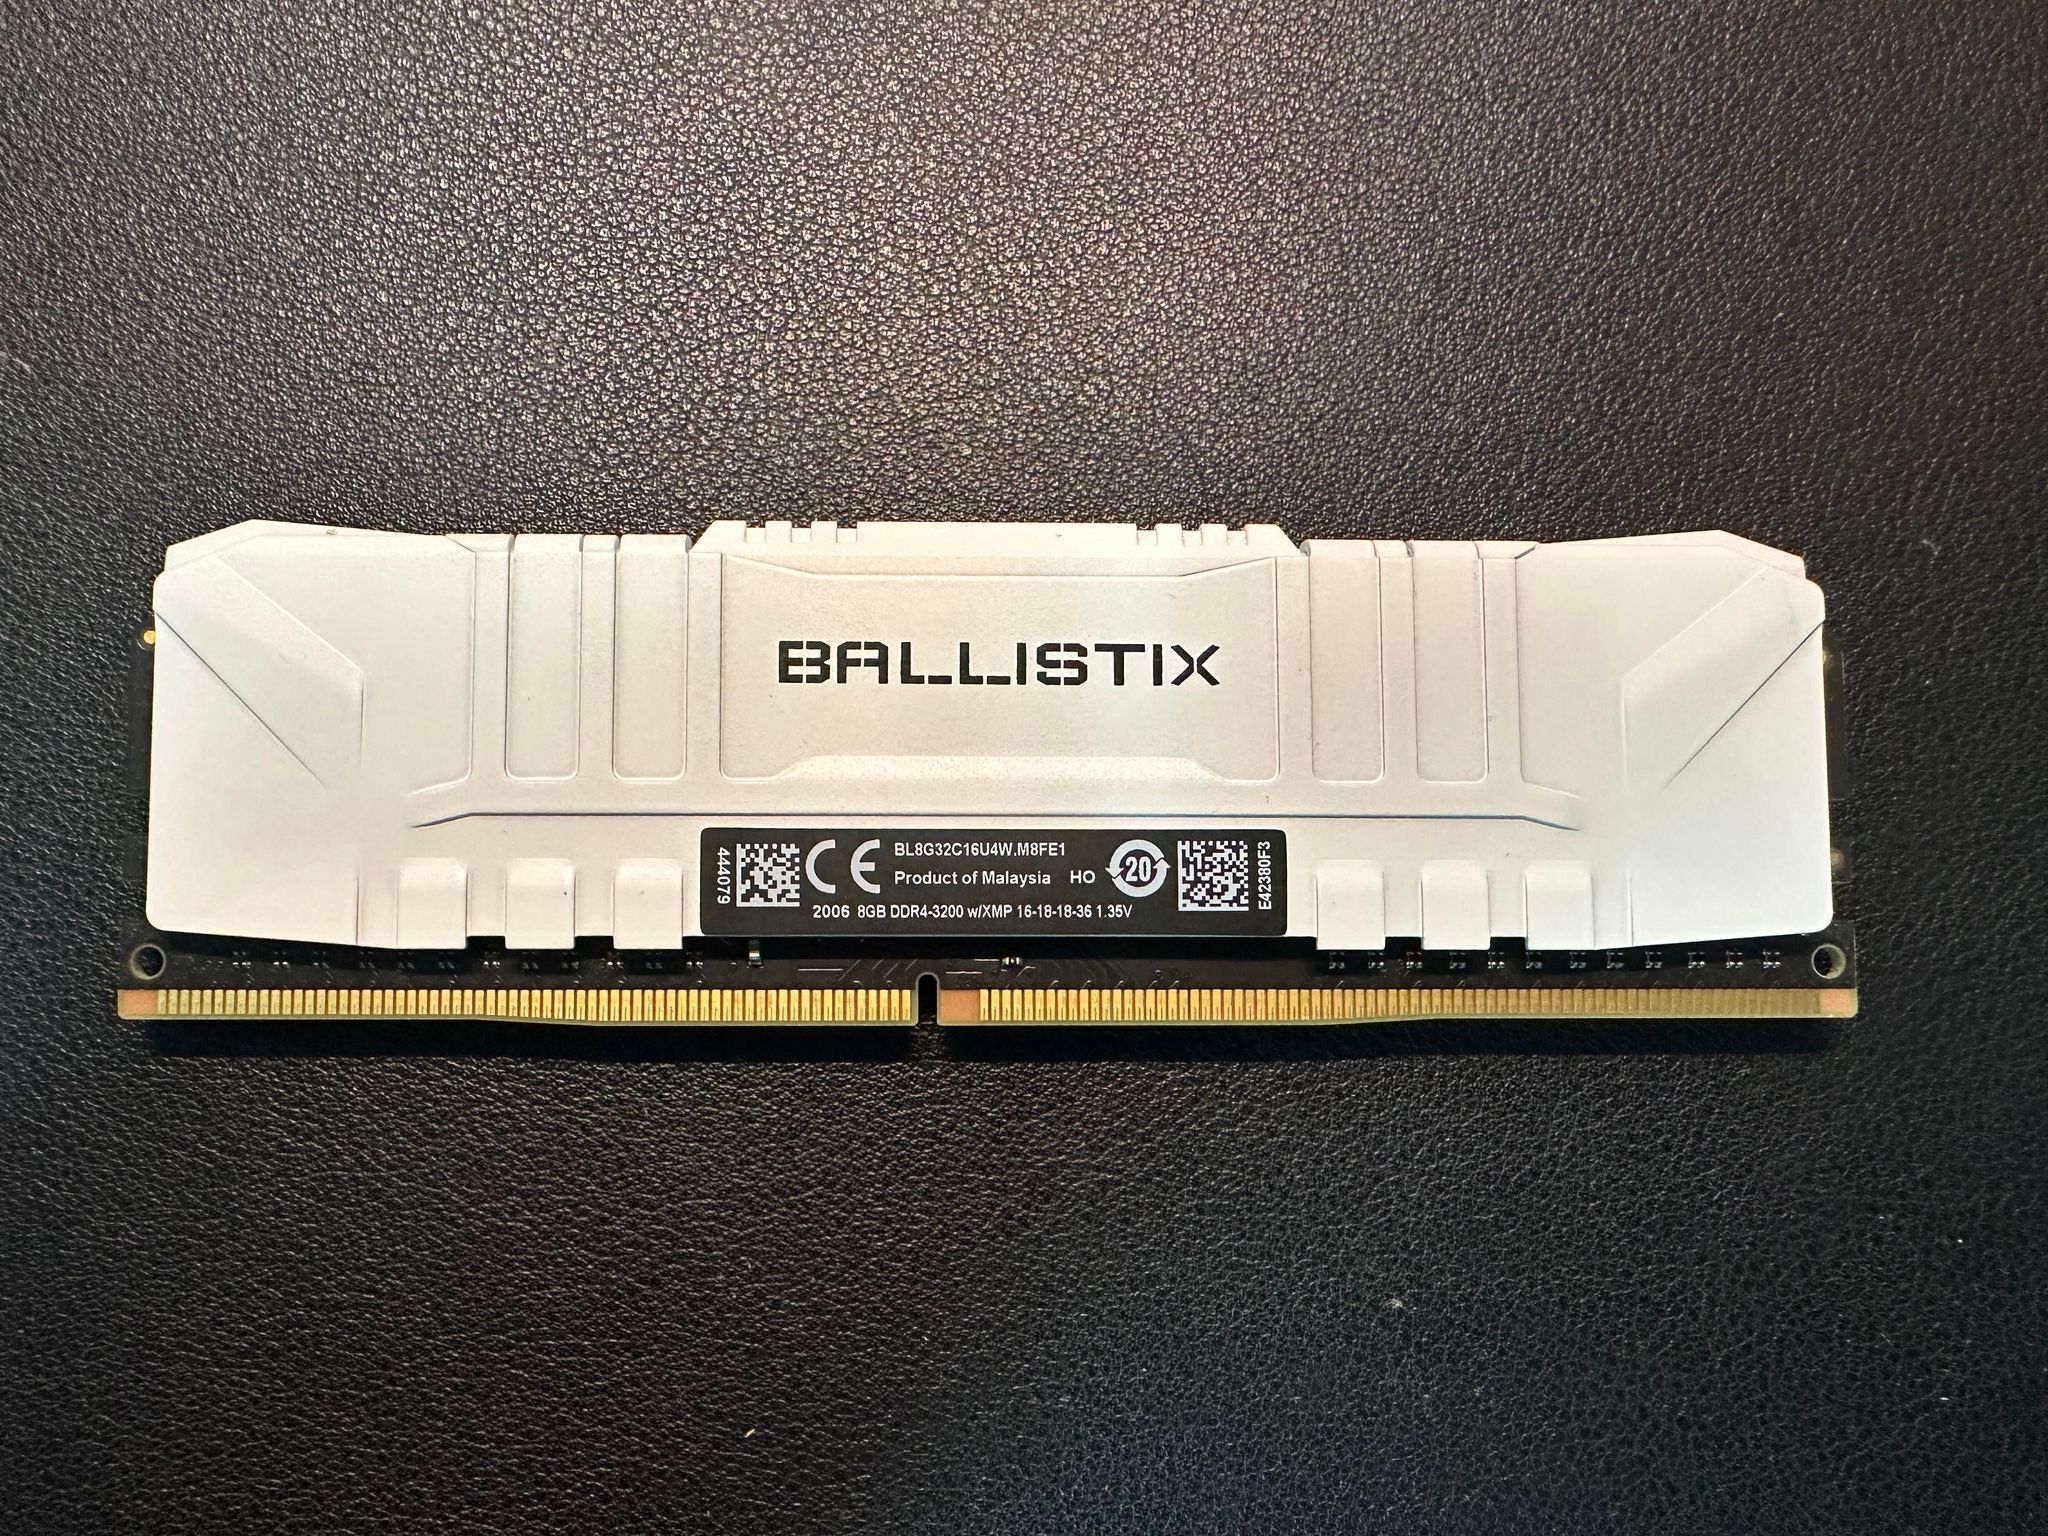 8G記憶體*3 BALLISTIX DDR4-3200 / GAMMIX D10 DDR4-3200*2